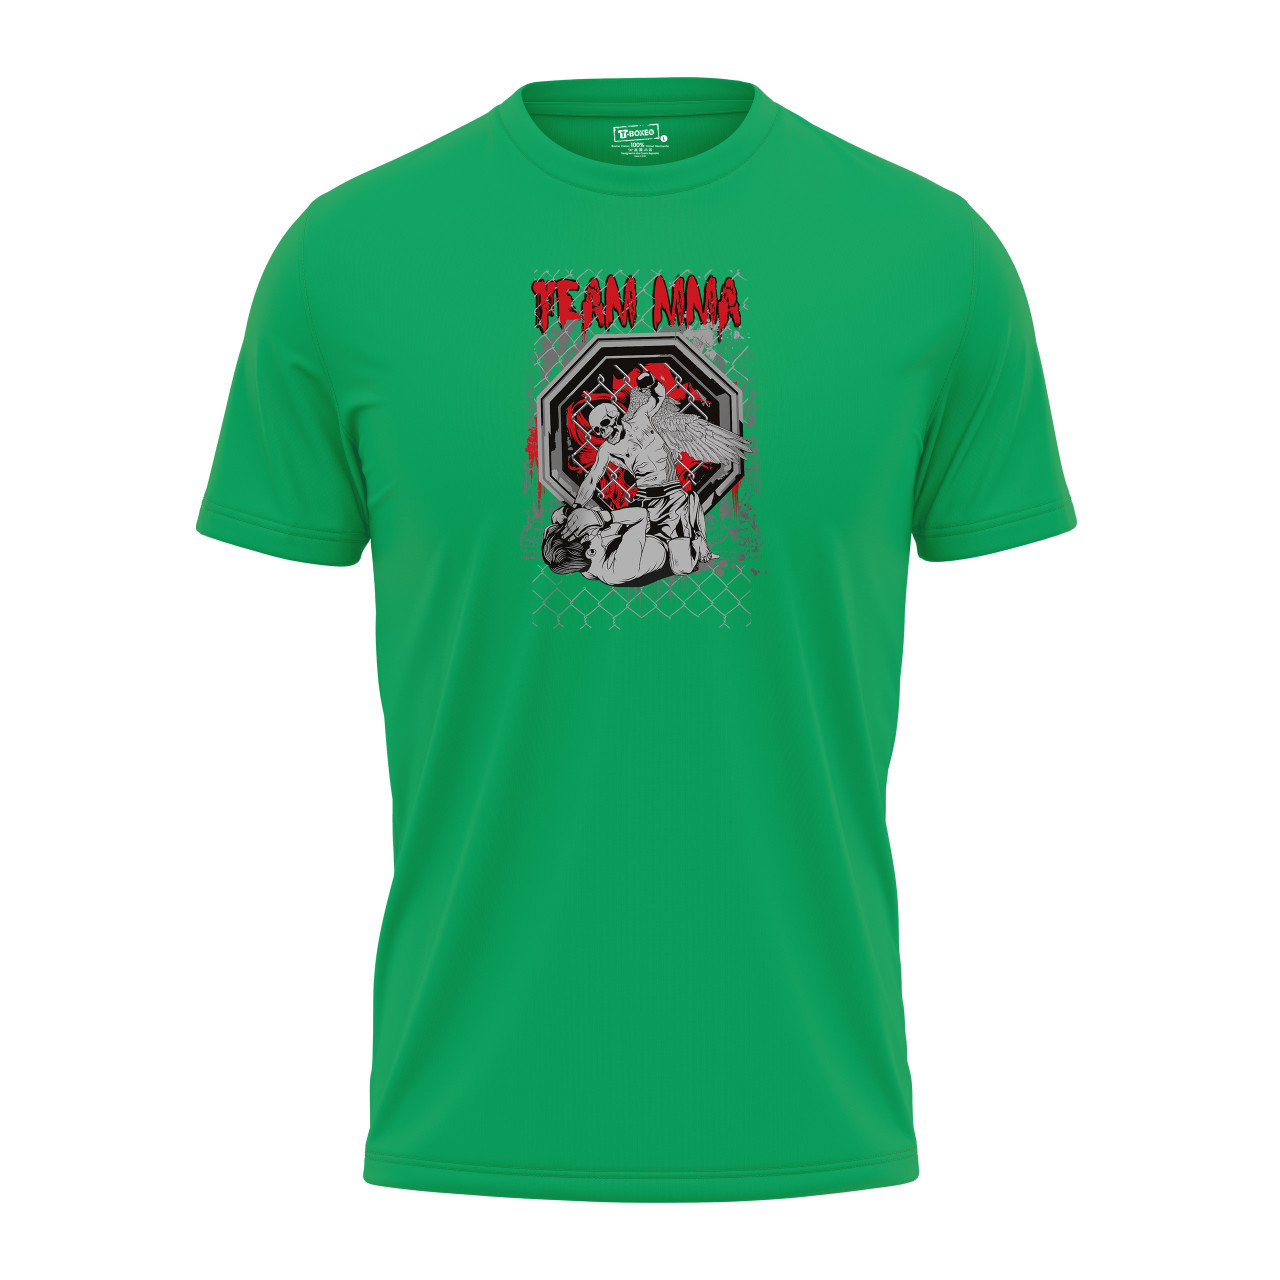 Pánské tričko s potiskem “Team MMA”